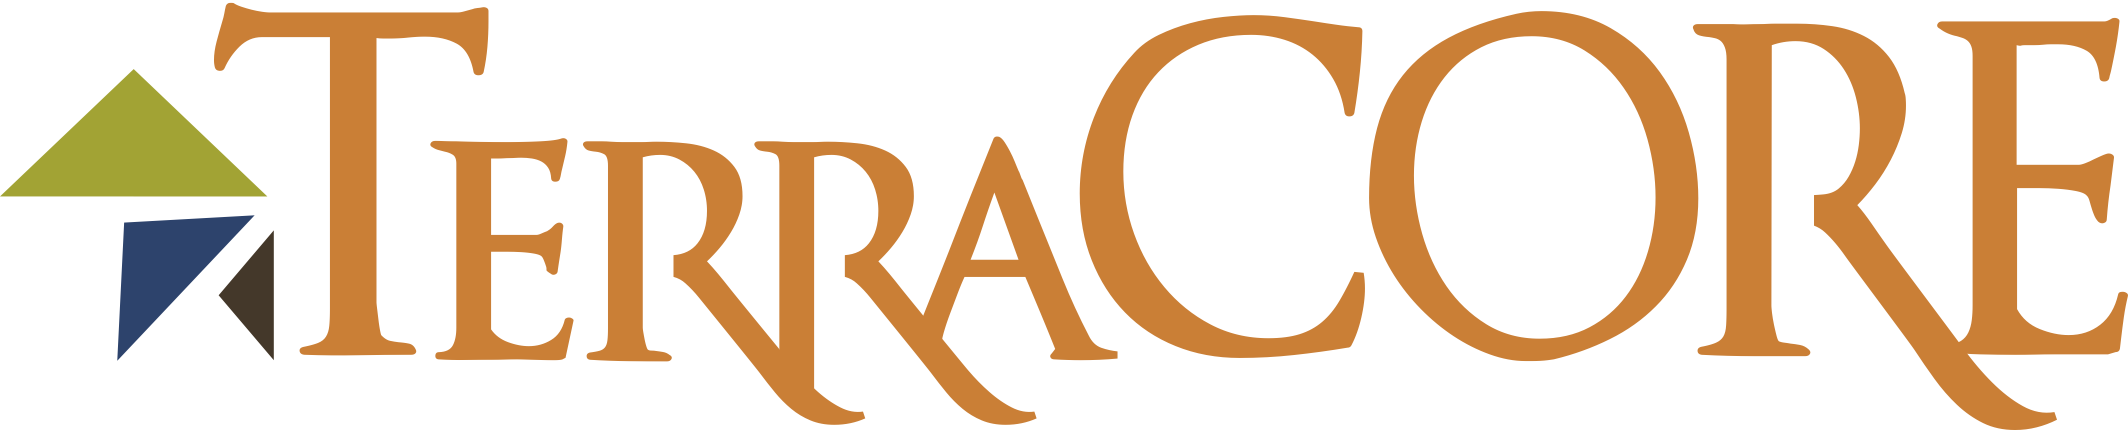 TerraCore Logo.png